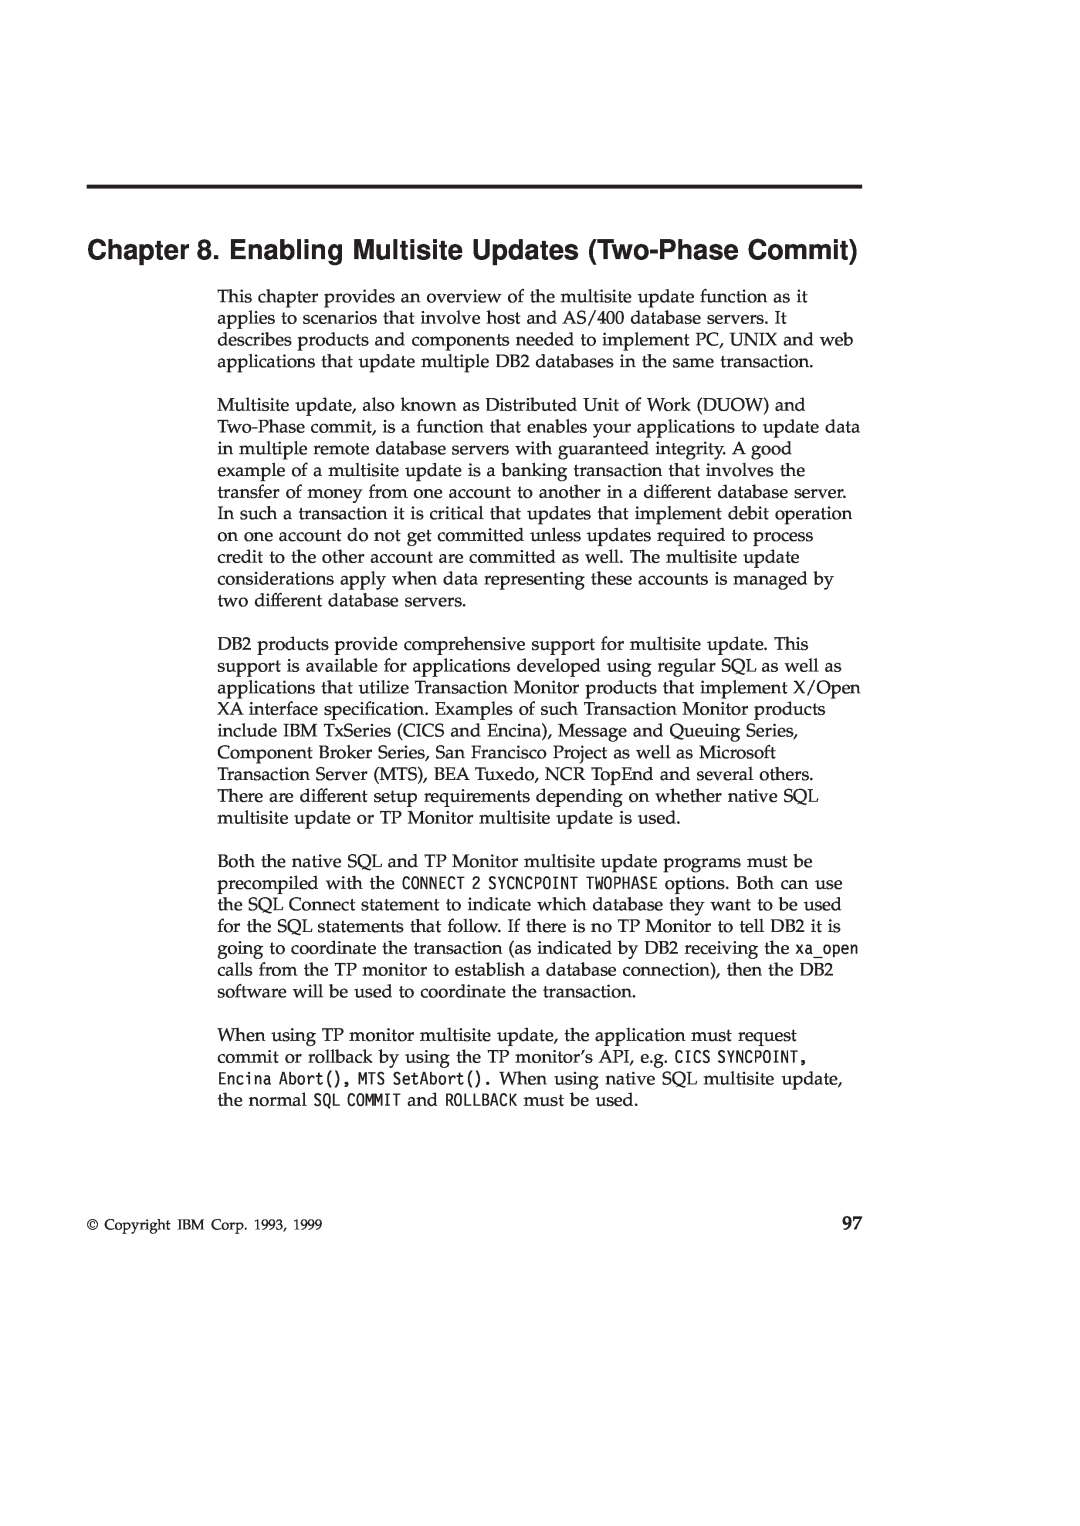 IBM GC09-2830-00 manual Enabling Multisite Updates Two-Phase Commit 